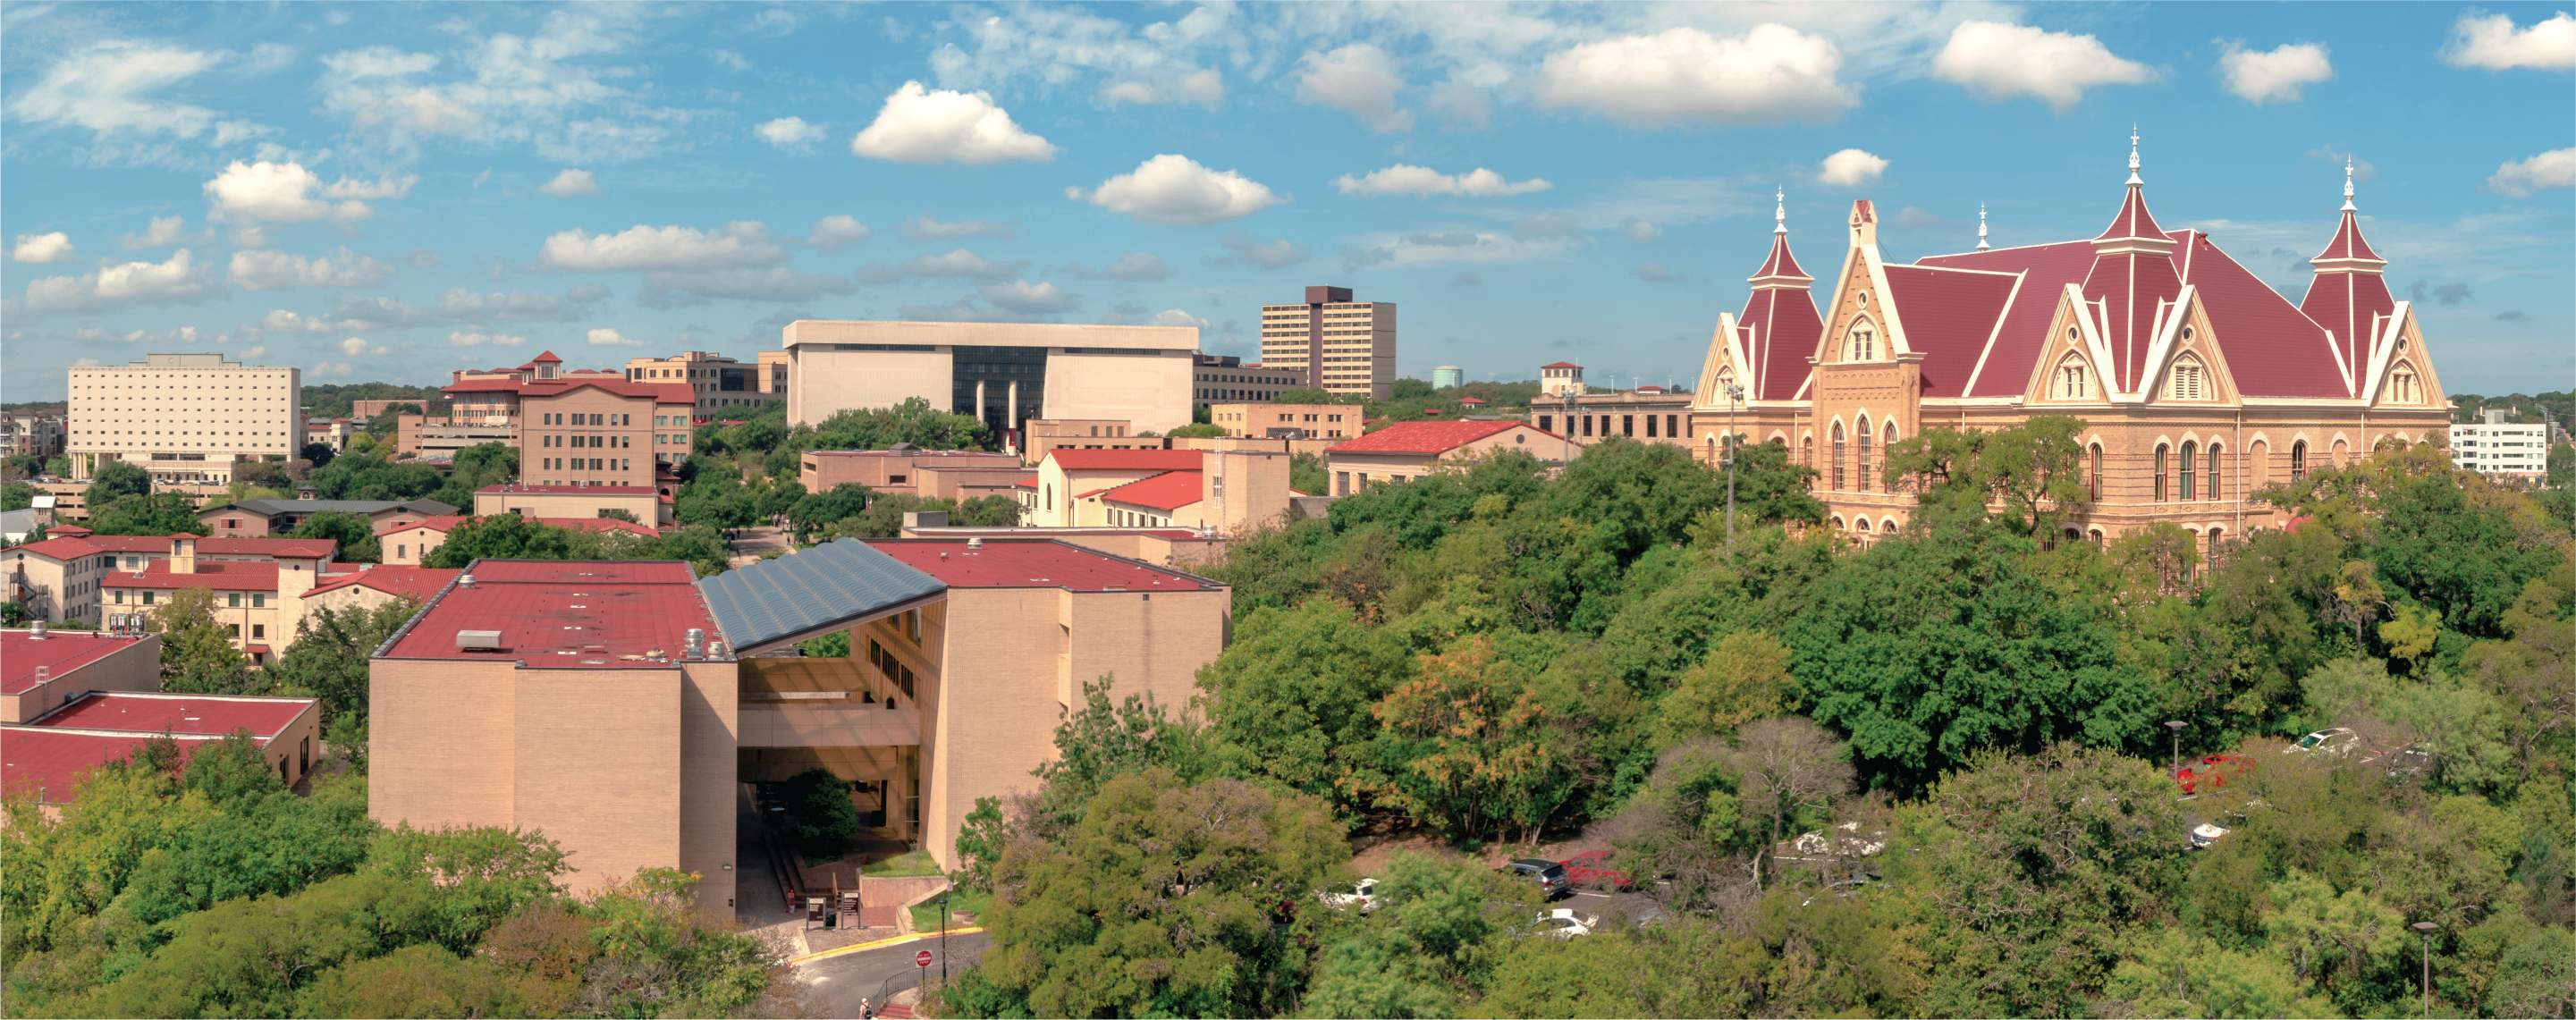 texas state university admission essay